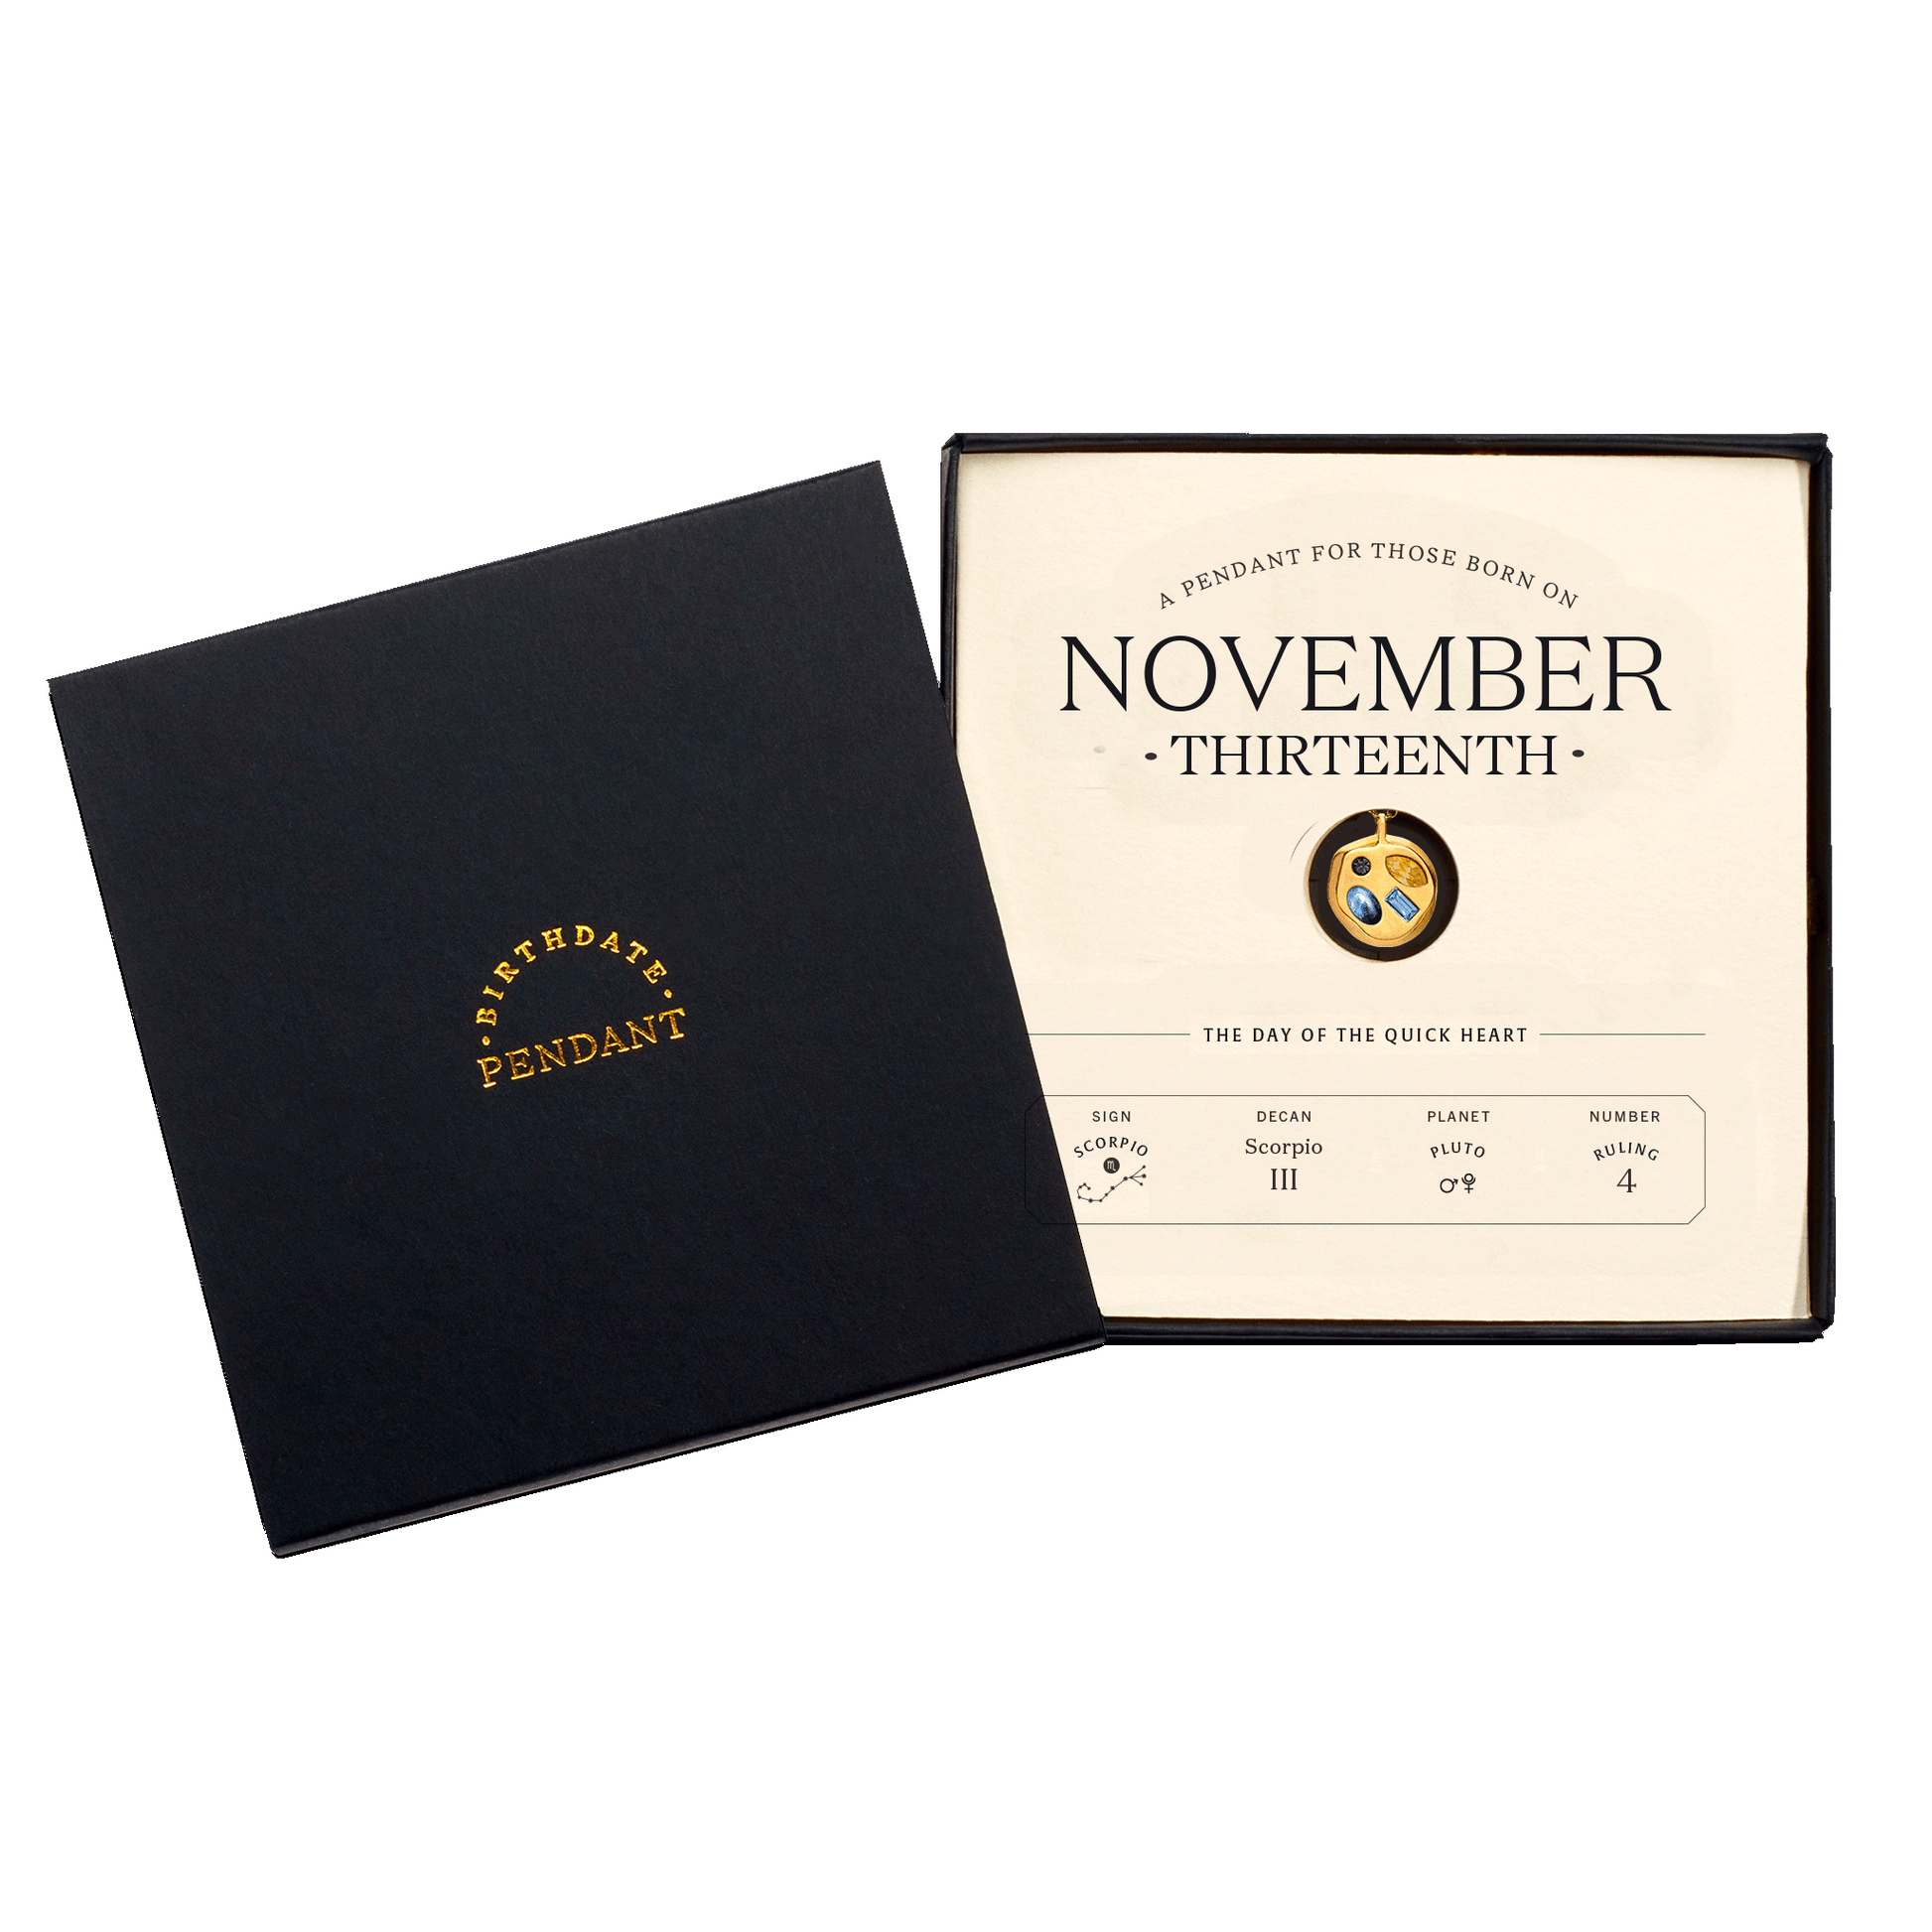 The November Thirteenth Pendant inside its box